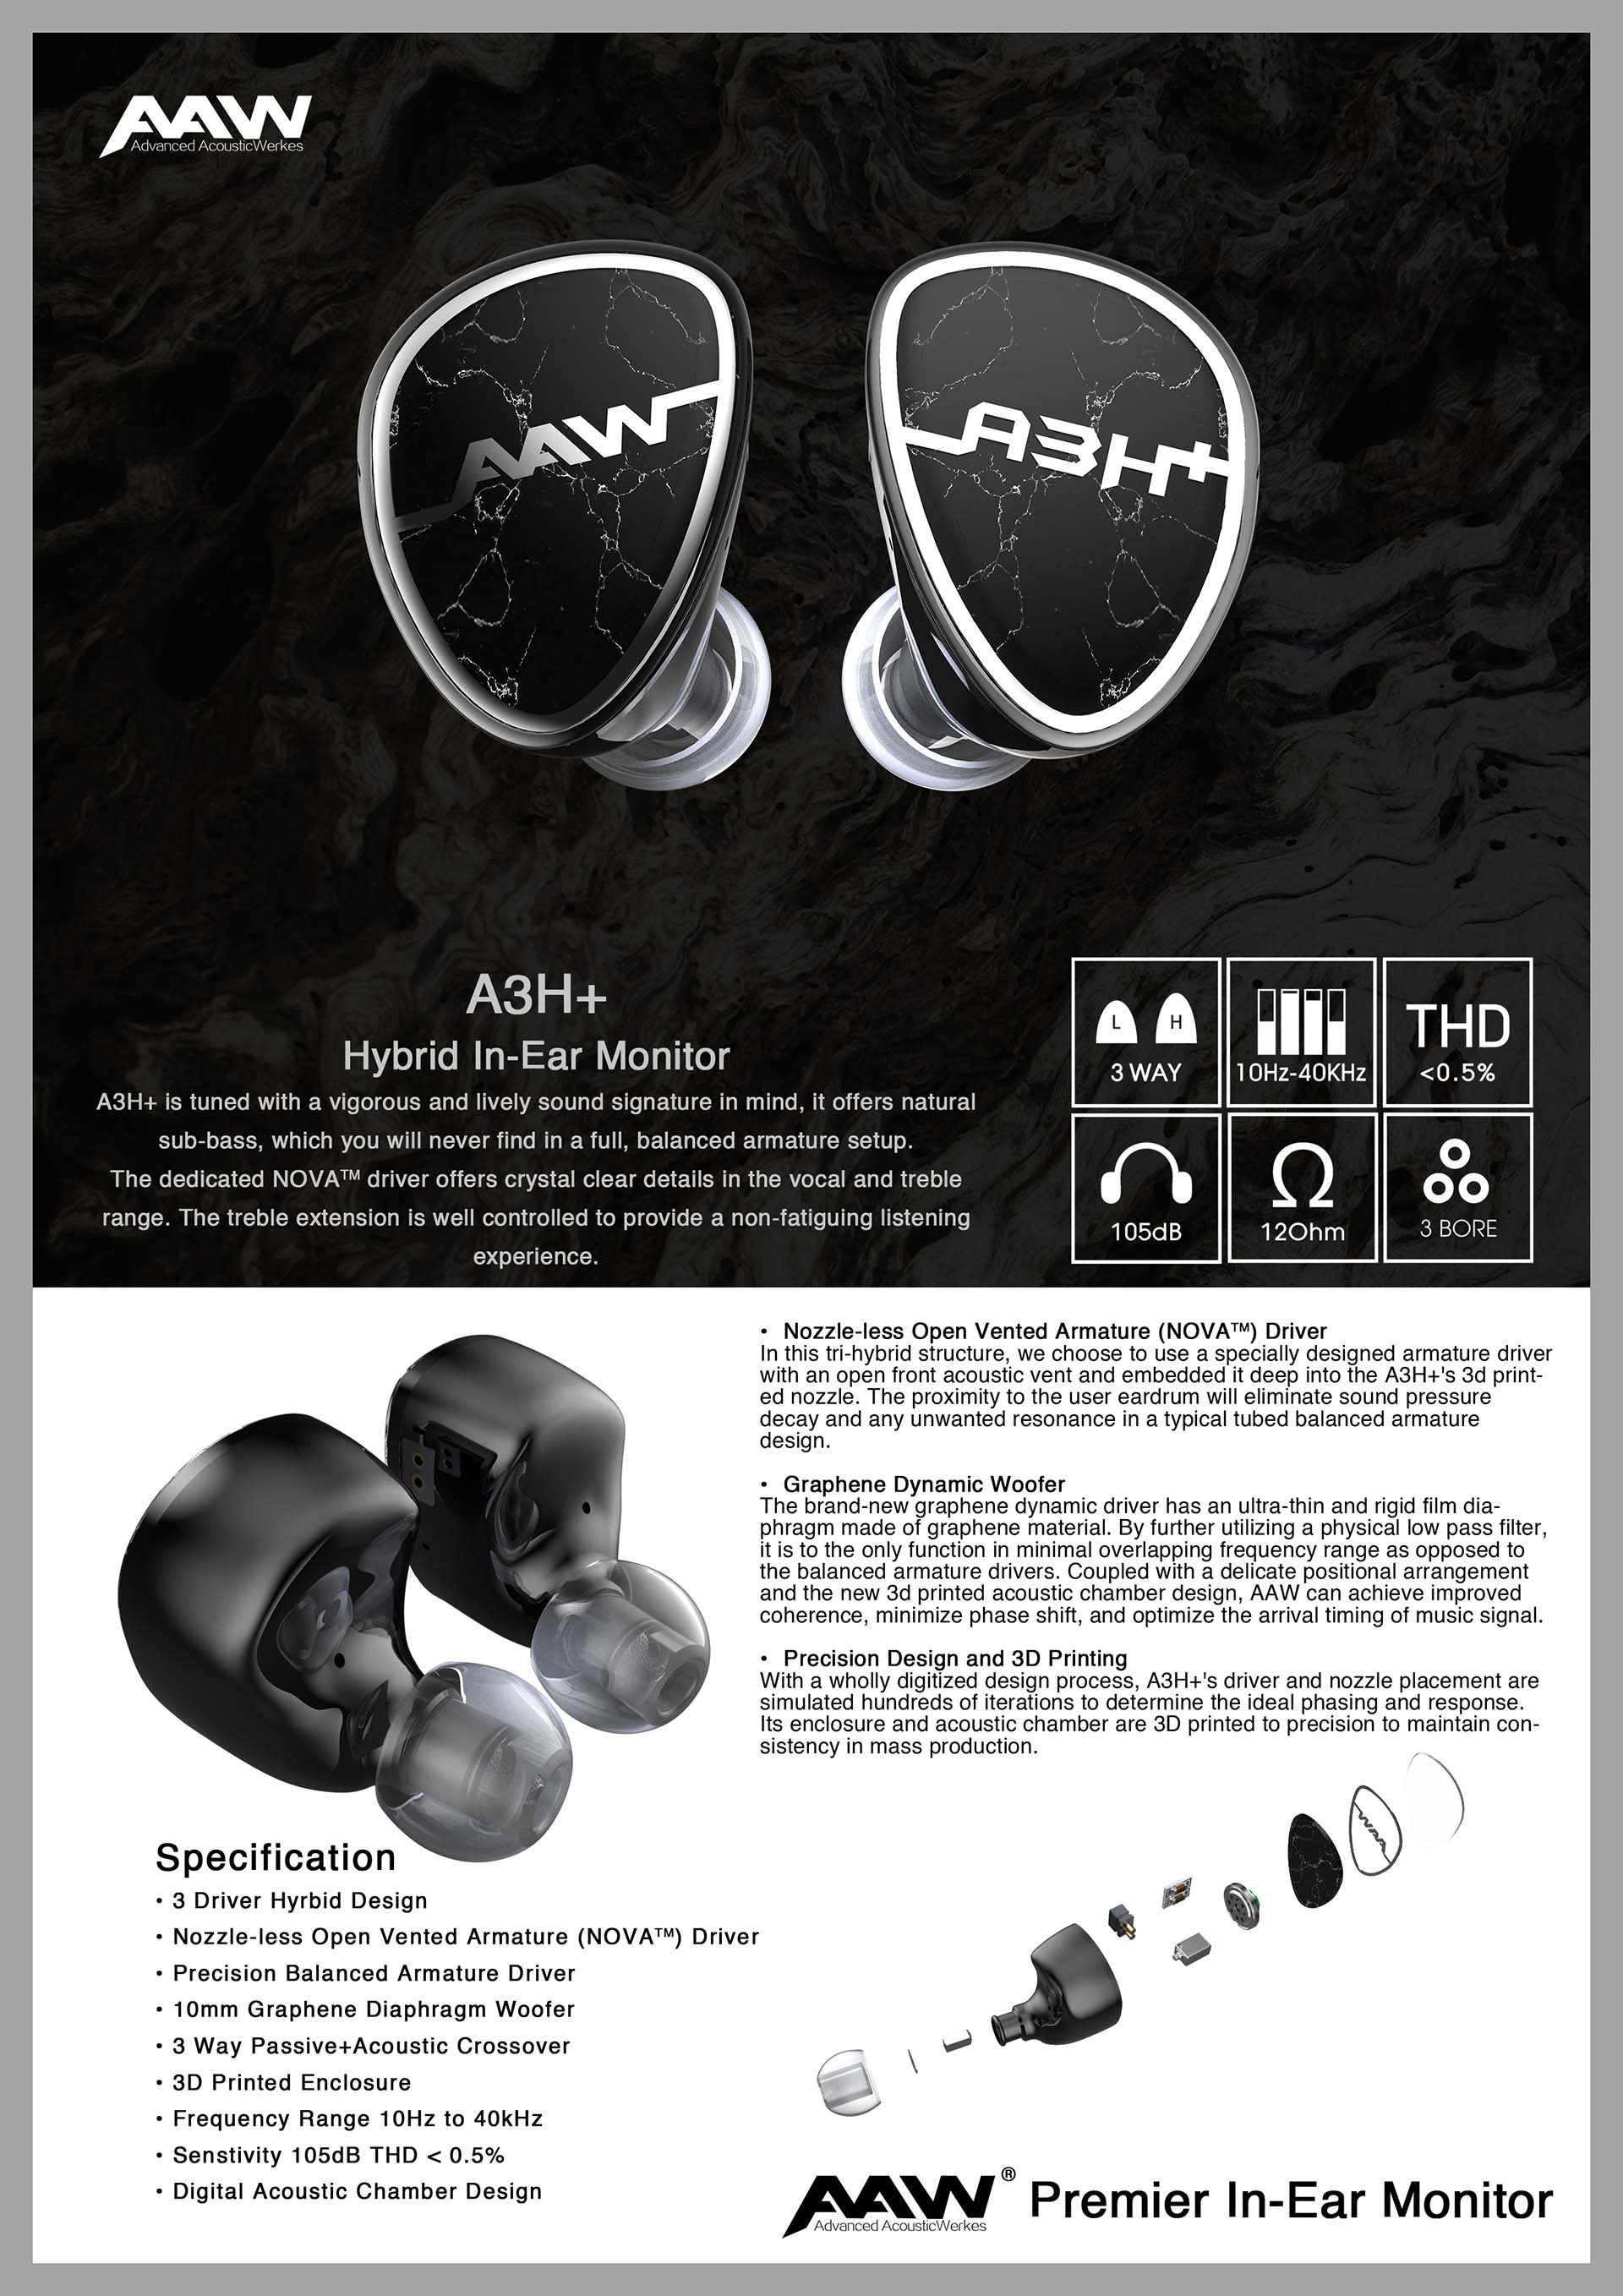 AAW ออกรุ่นใหม่ รุ่น A3H+ หน้าตาดีมาก สเปคแรงกว่าเดิม เพิ่มเติมคือความหล่อที่เรียกว่าโดนใจเลยทีเดียวละครับ เร็วๆนี้ที่ Soundproofbros